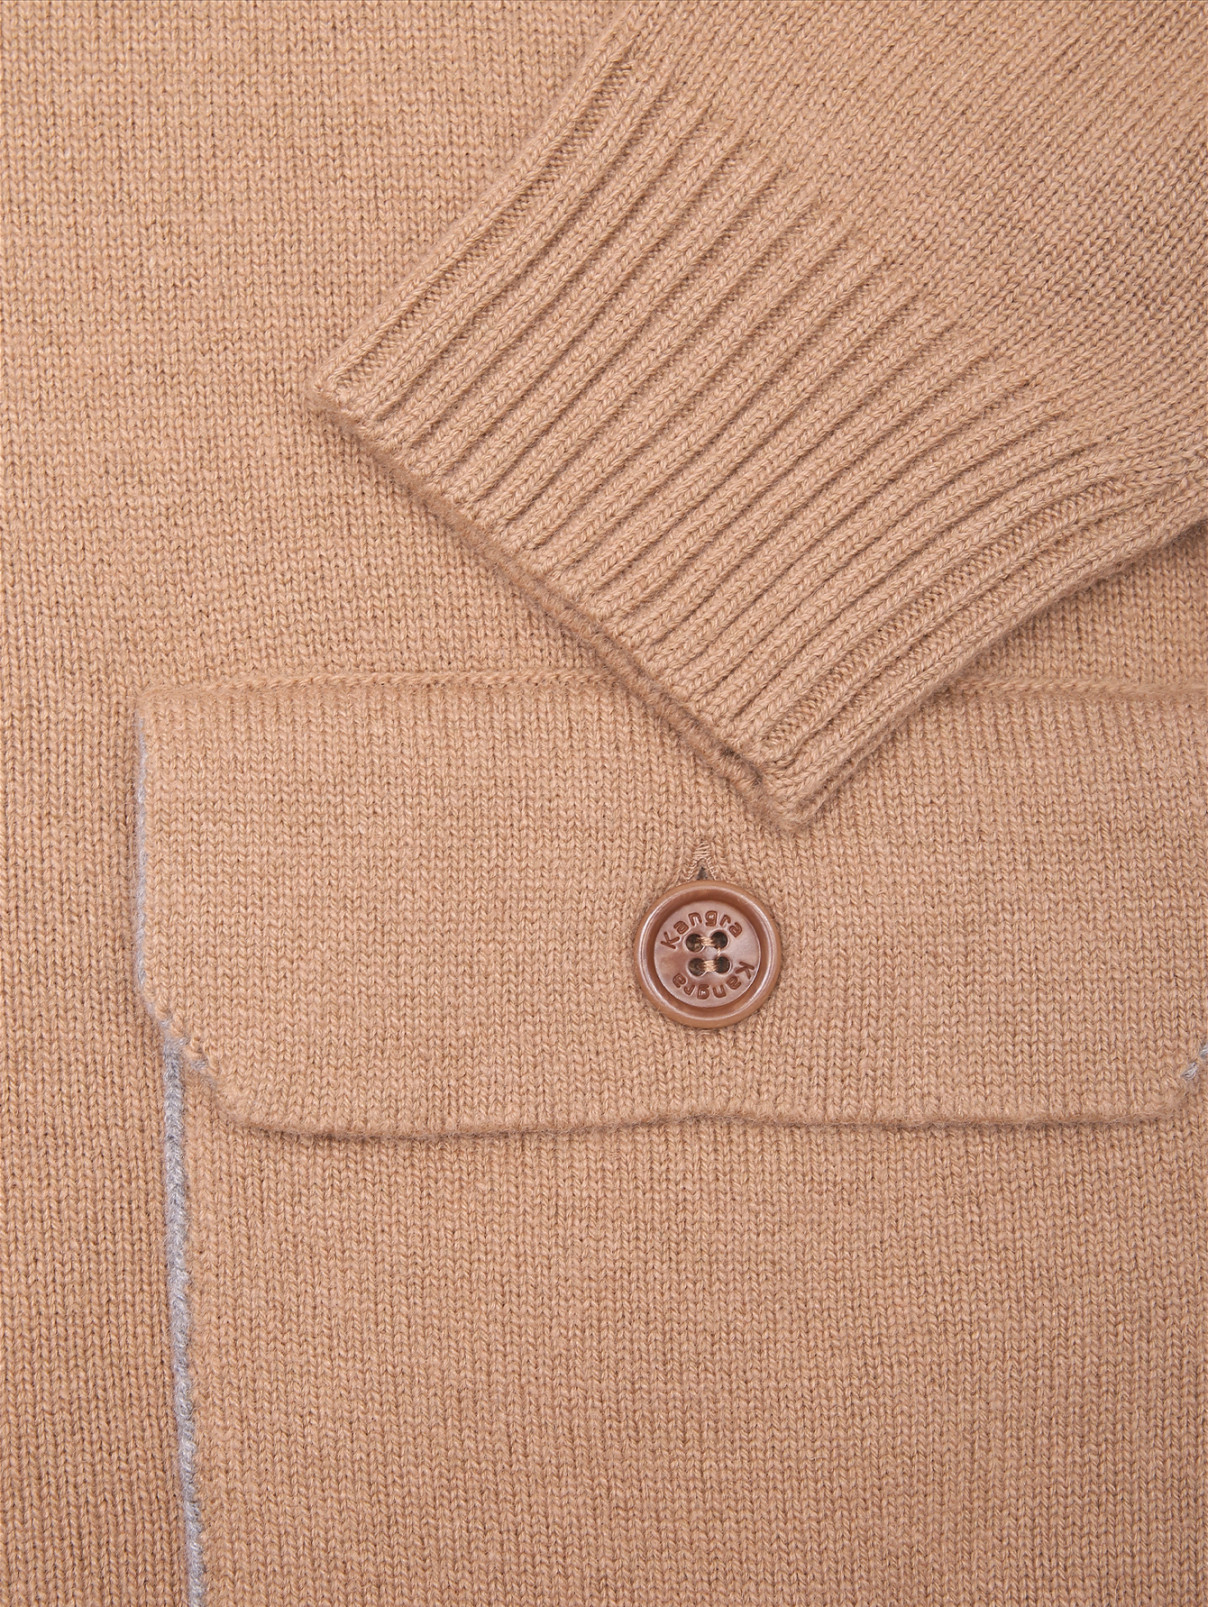 Кардиган из смешанной шерсти с карманами Kangra Cashmere  –  Деталь1  – Цвет:  Бежевый